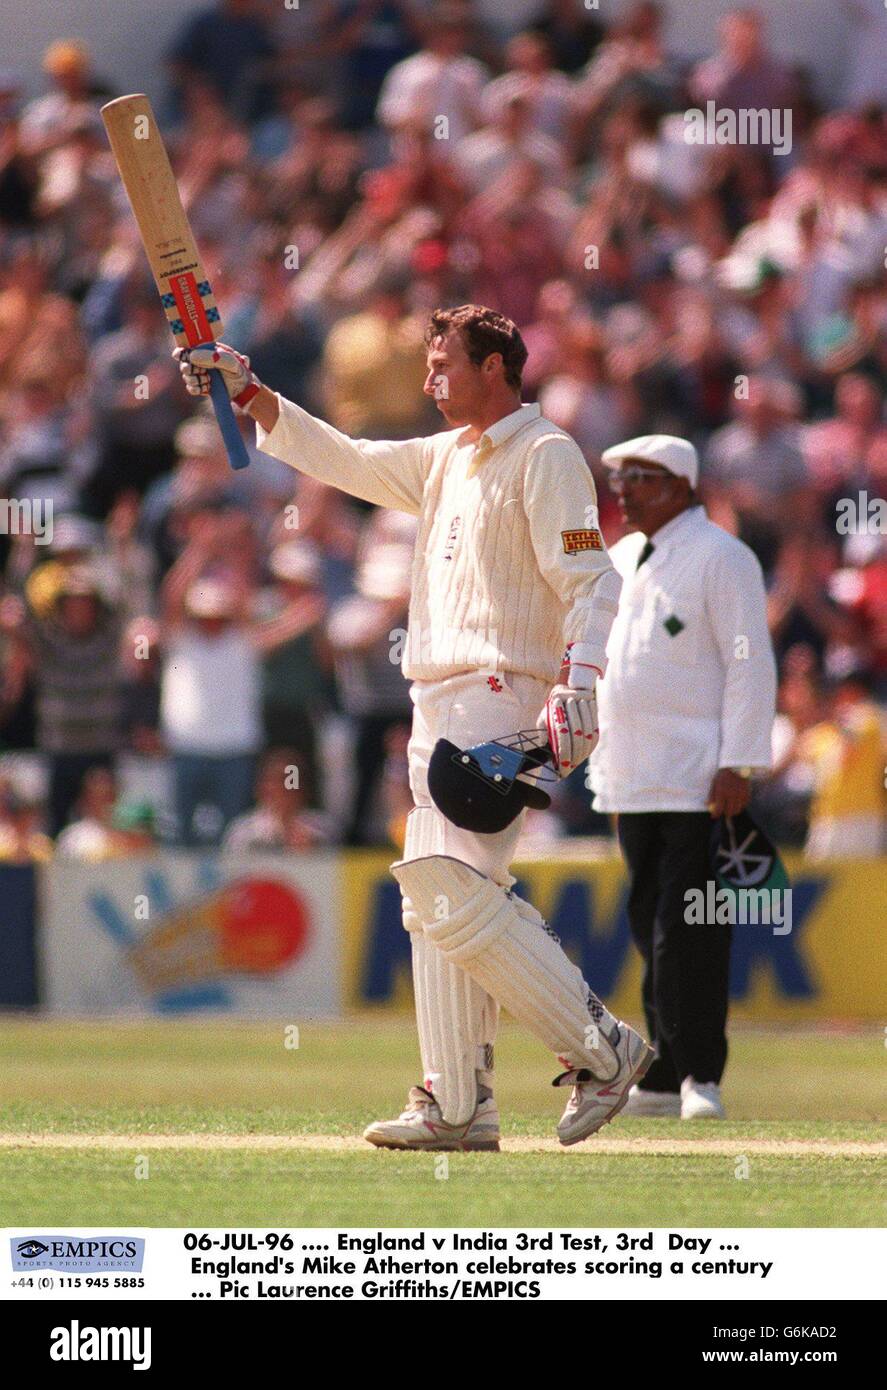 06-JUL-96, England v India 3rd Test, 3rd Day, England's Mike Atherton celebrates scoring a century Stock Photo